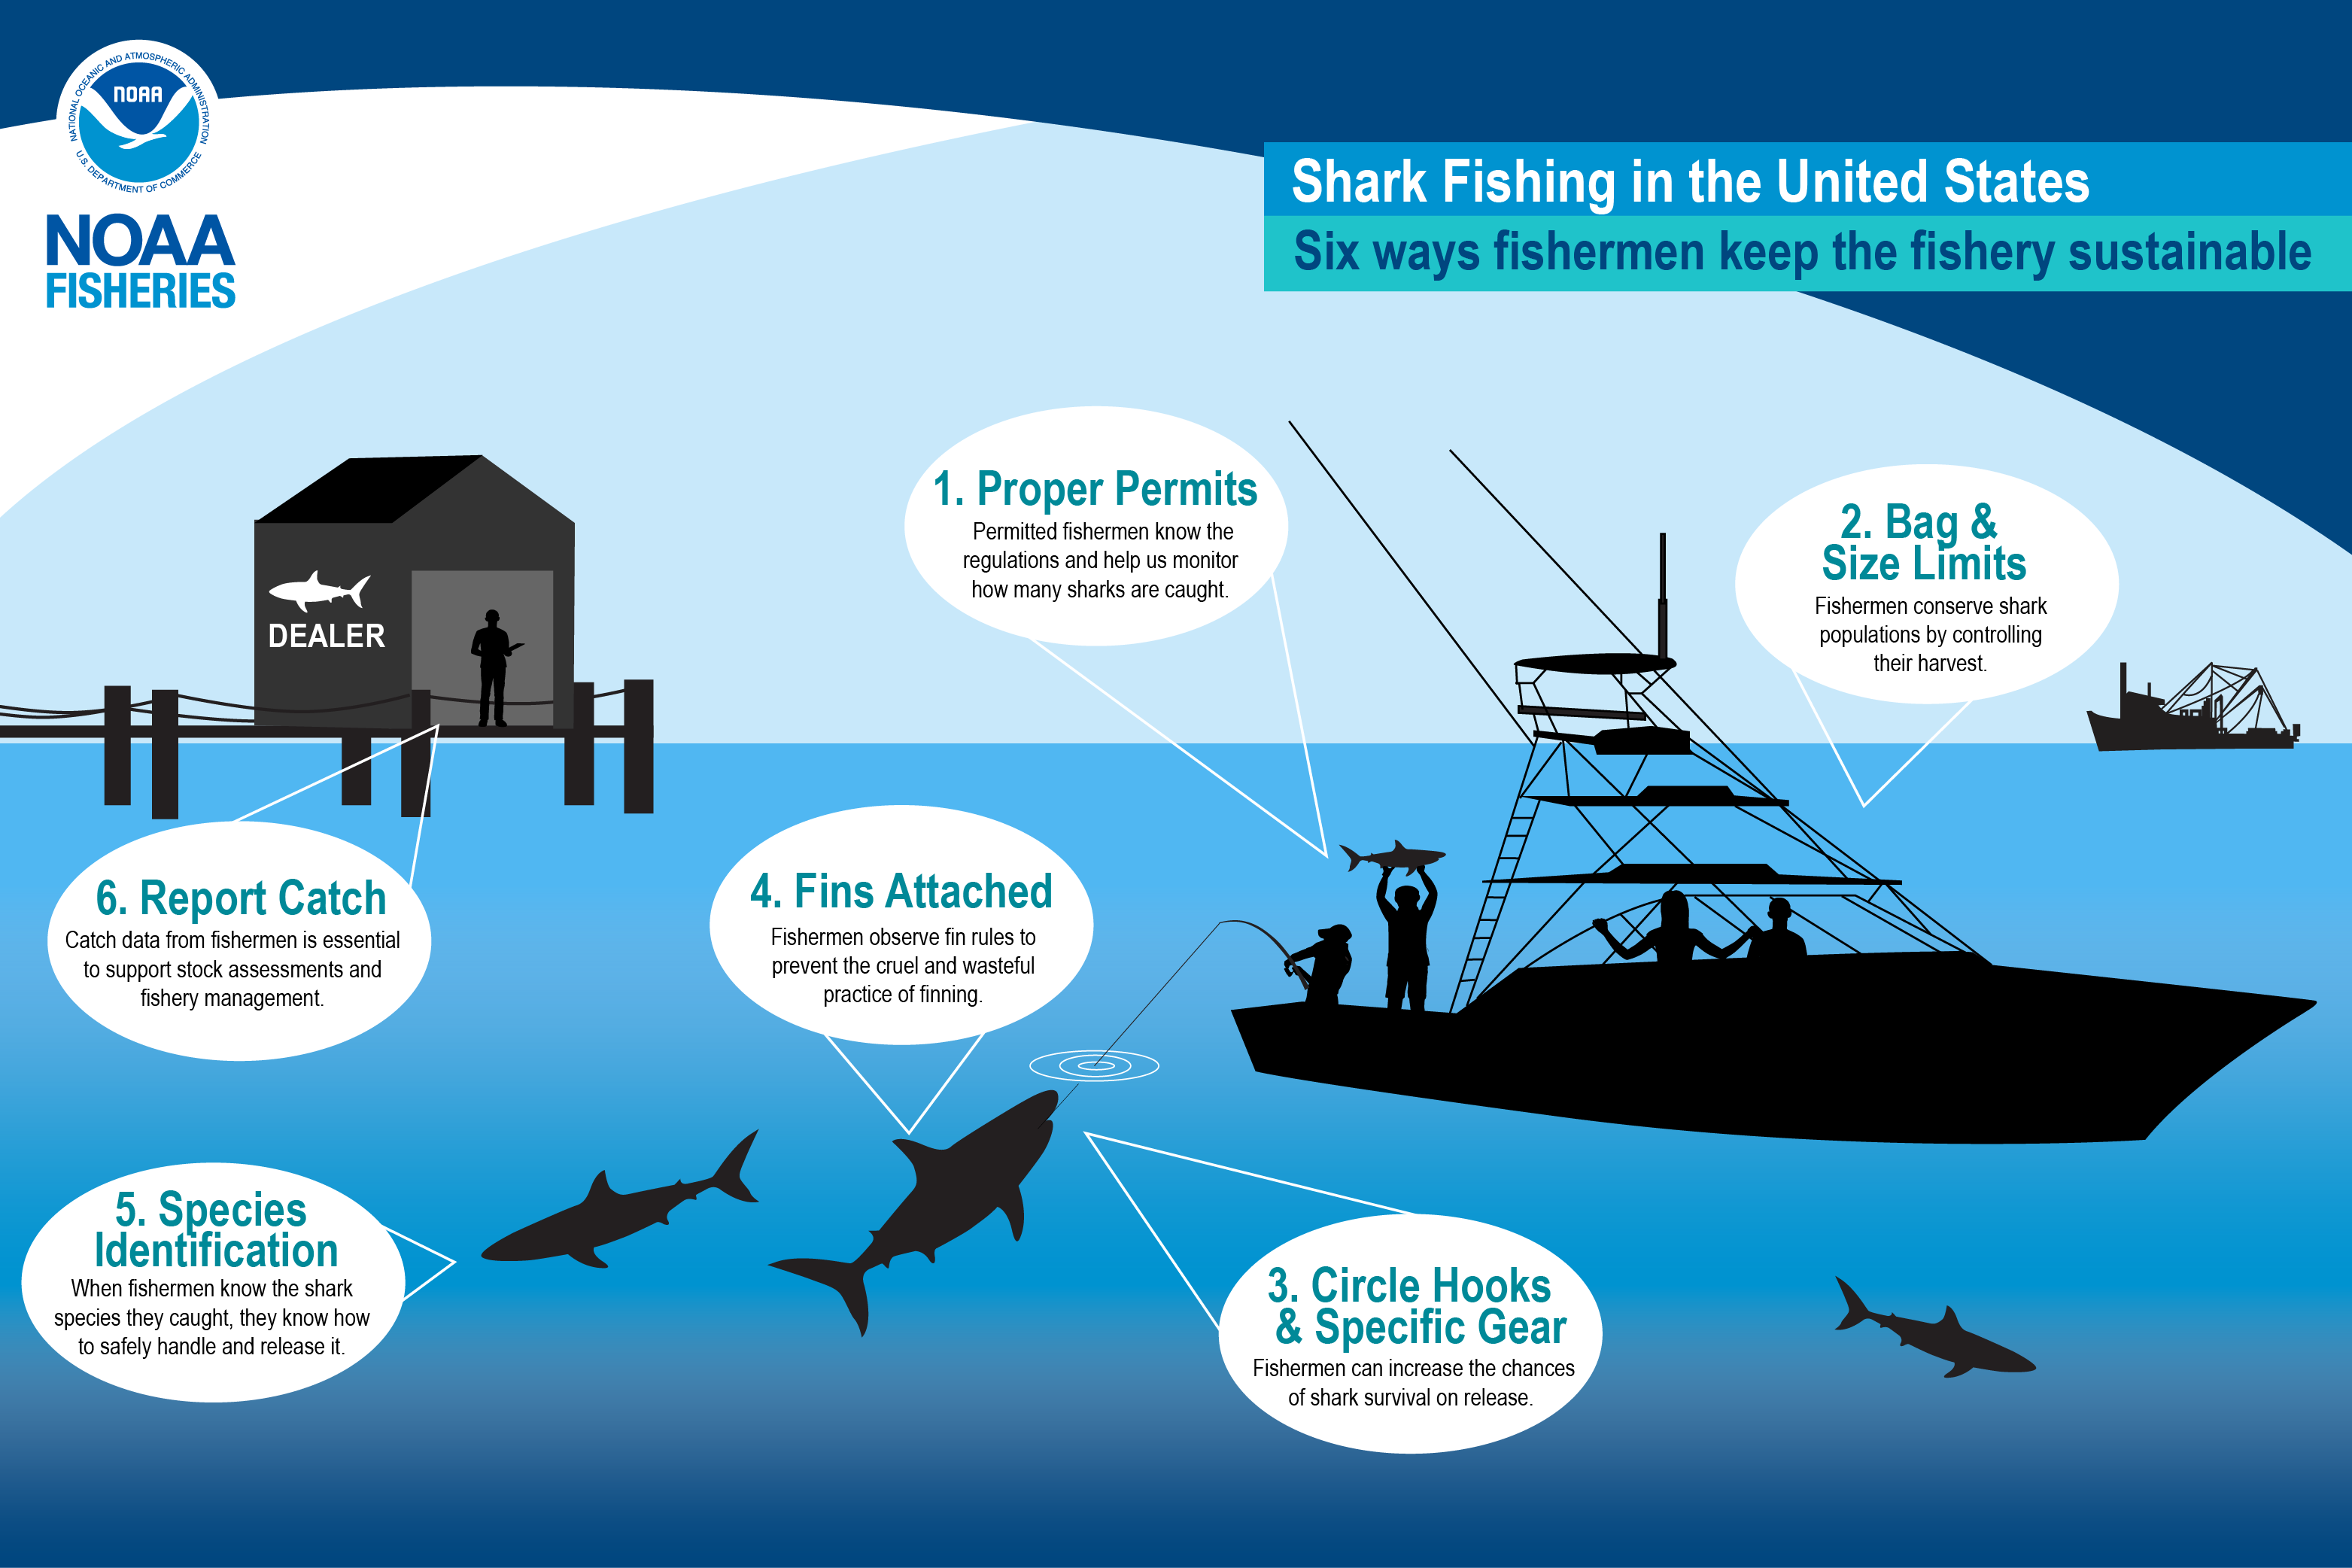 Six Ways Fishermen Keep Shark Fishing Sustainable